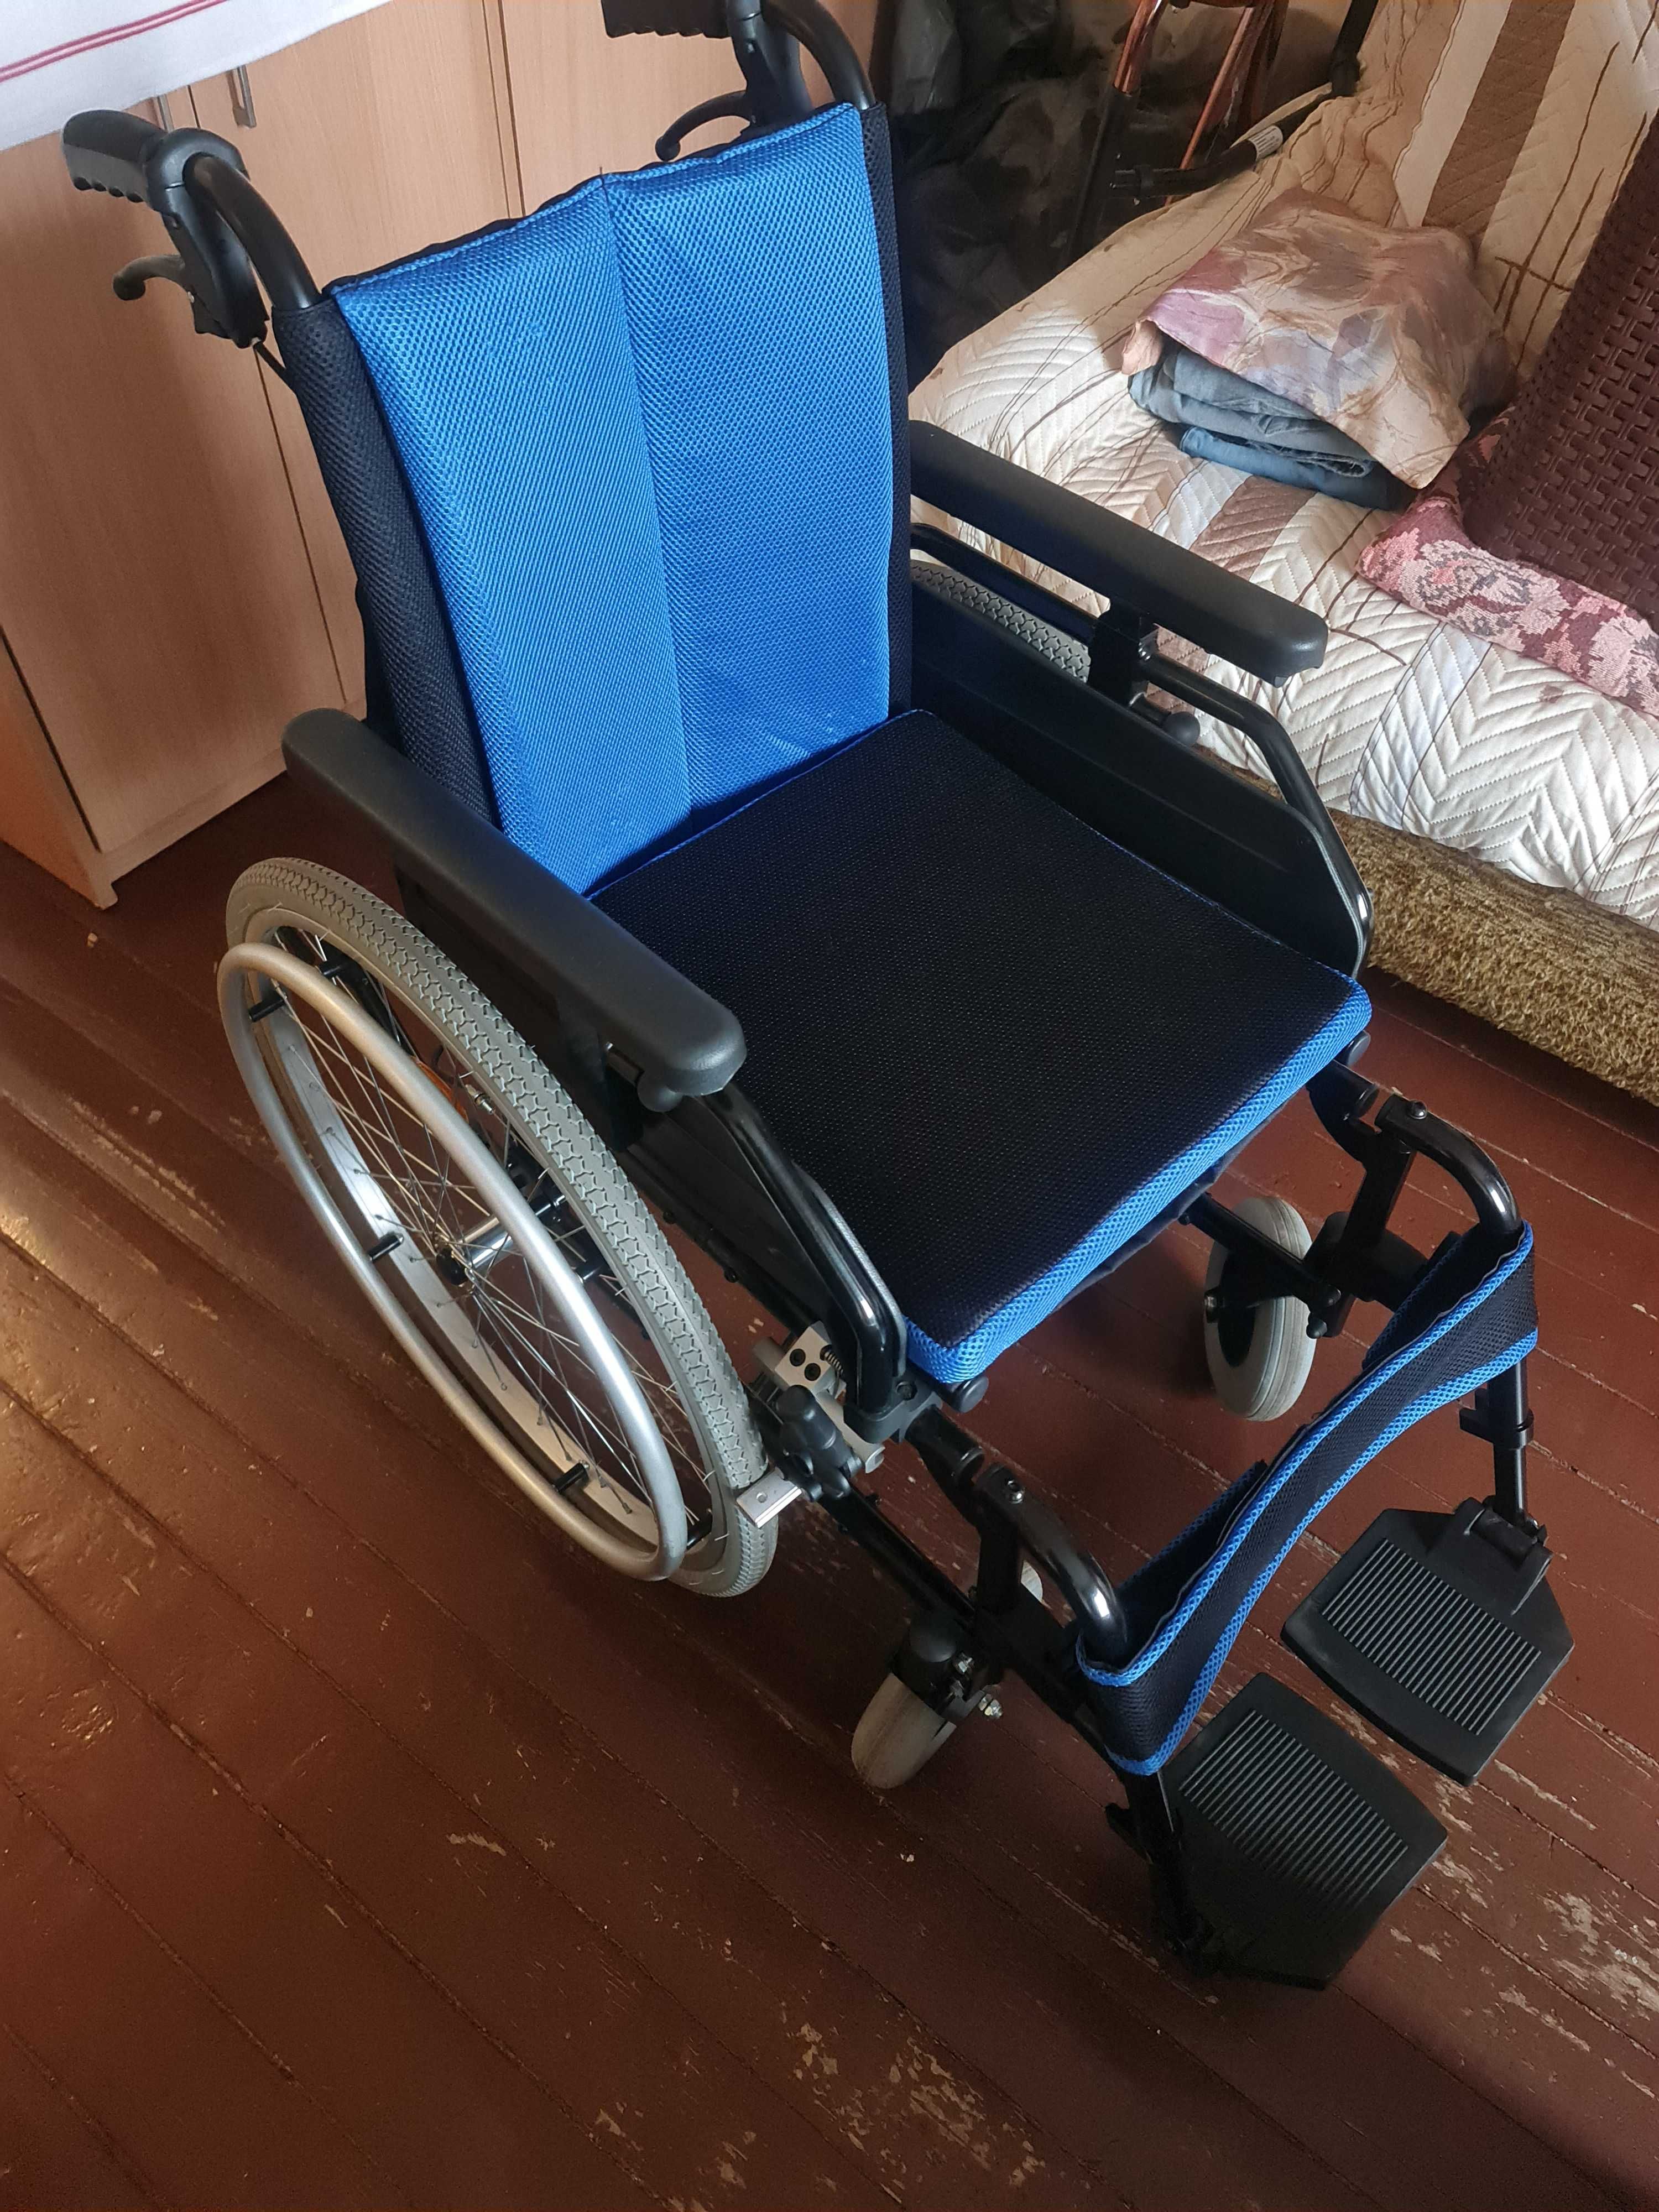 Инвалидна количка - Vita Care 9 AC Chameleon